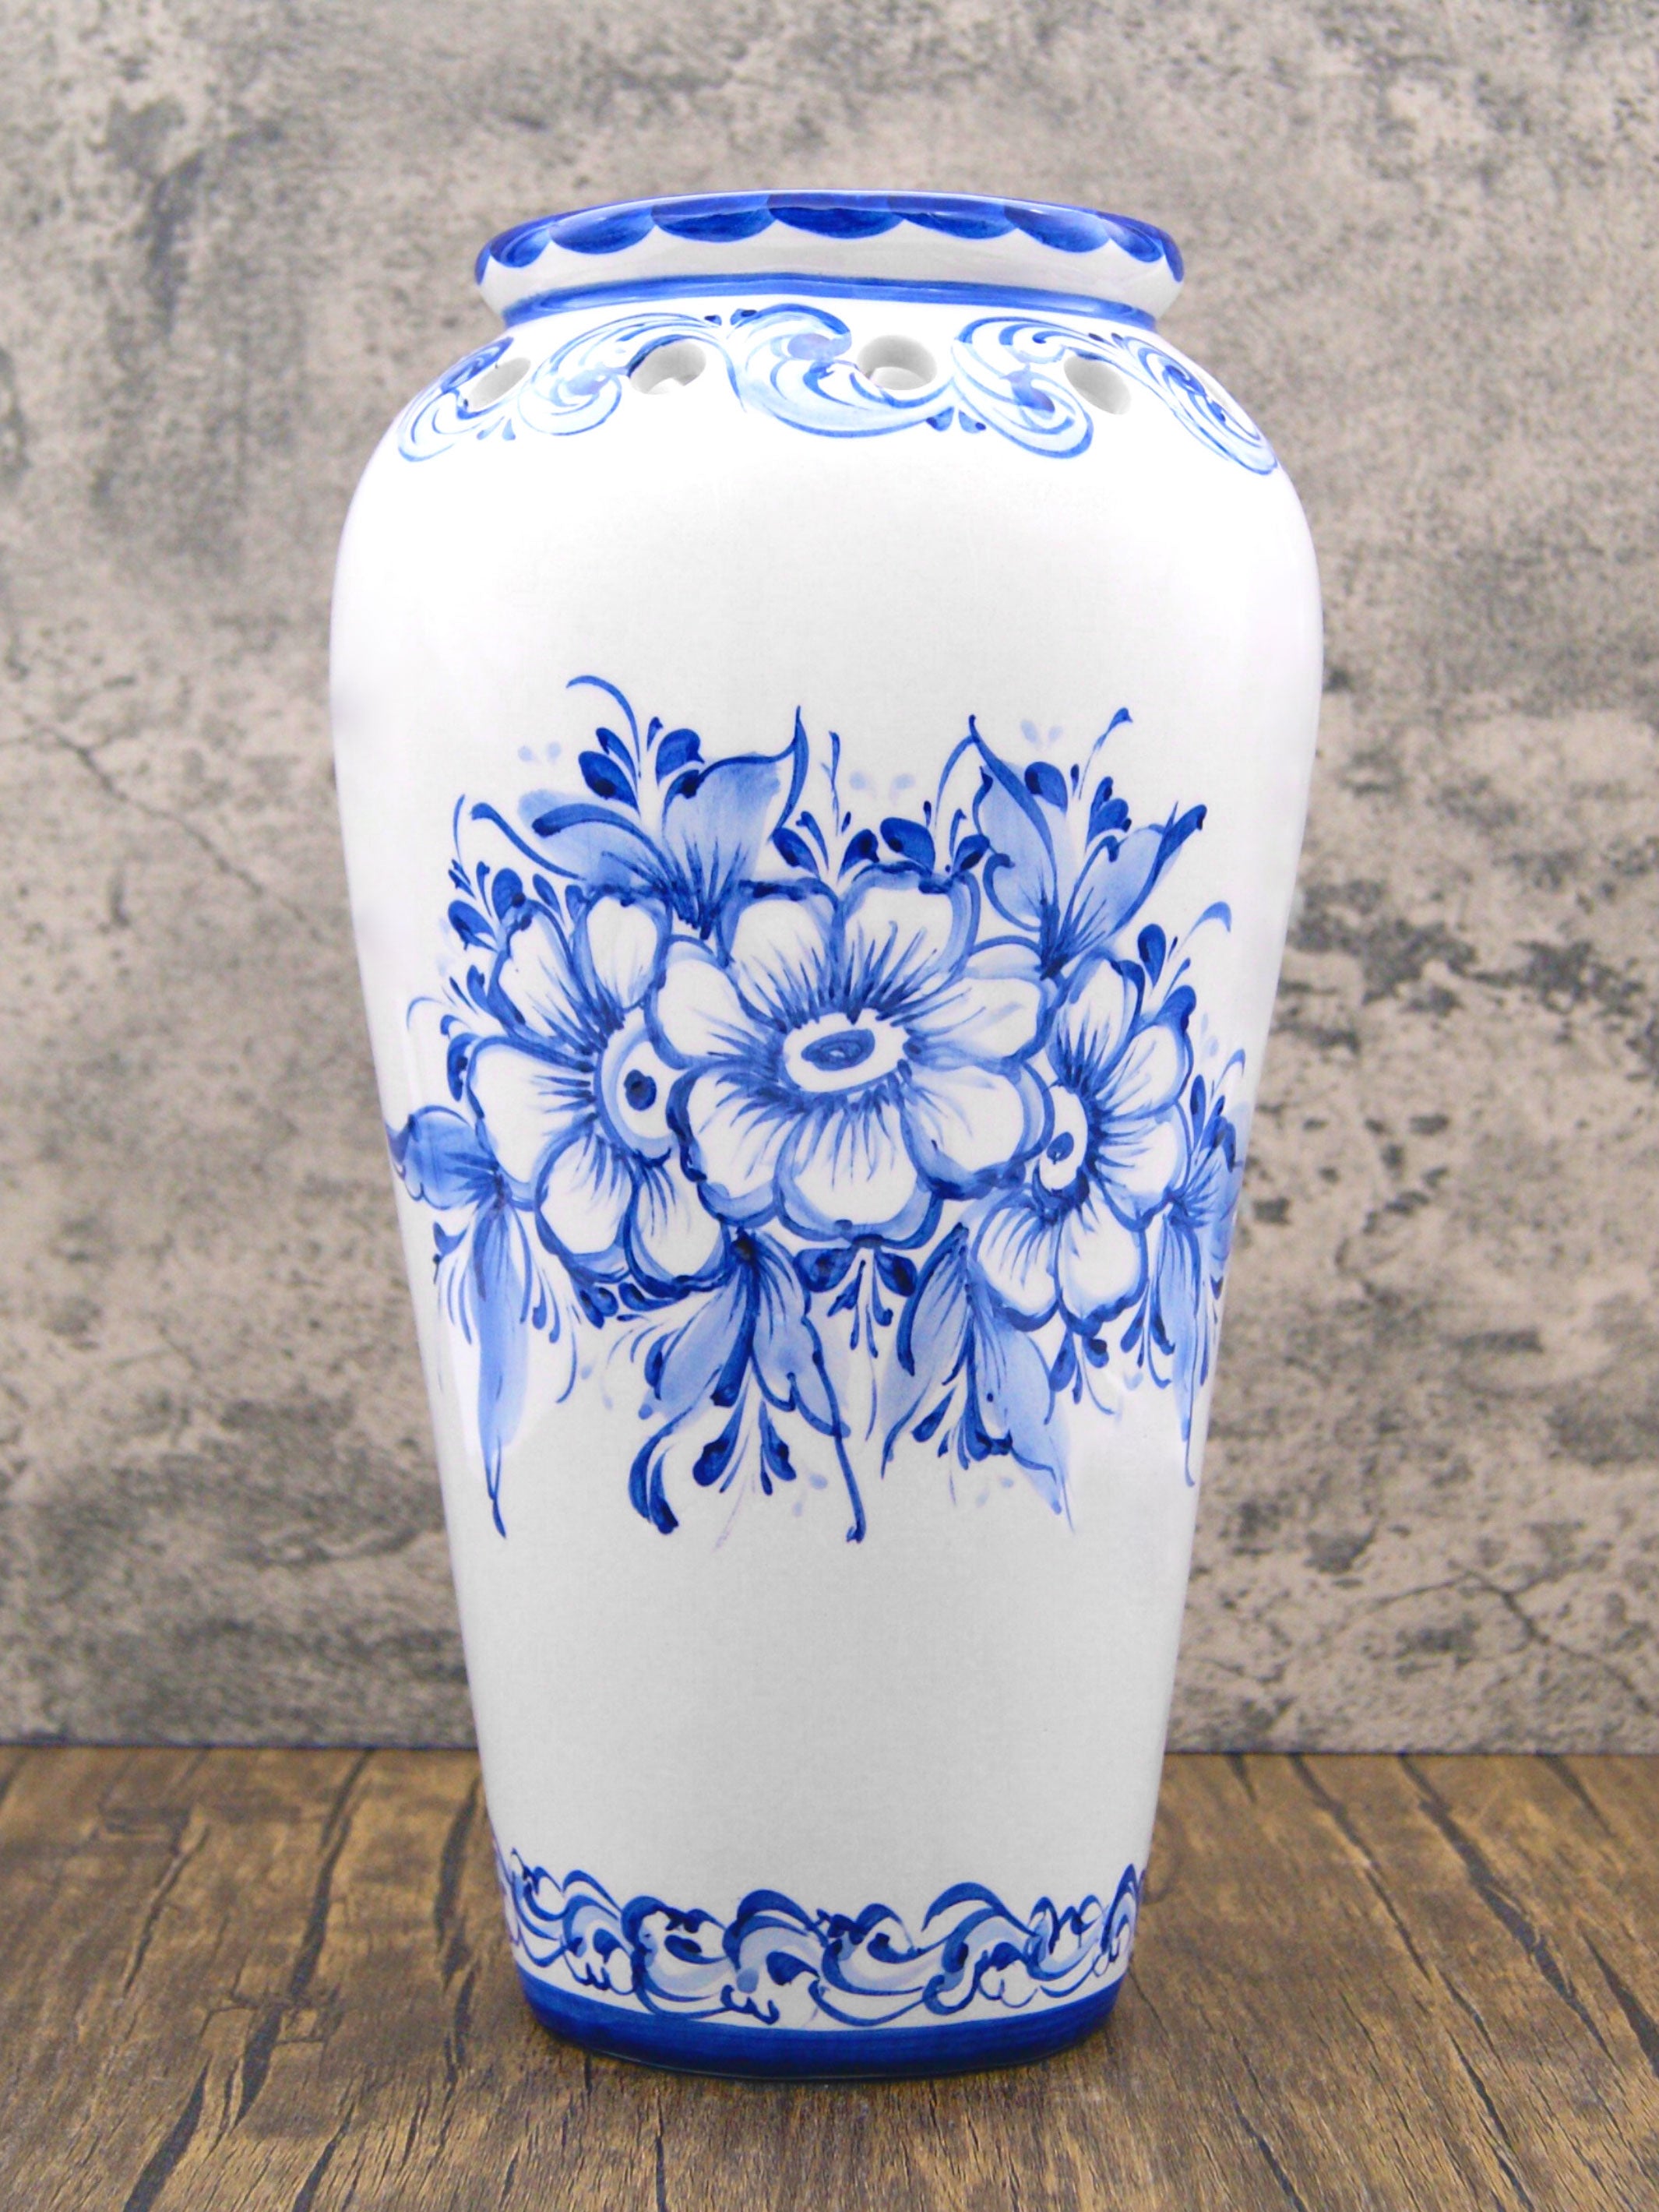 Hand Painted Blue & White Portuguese Pottery Ceramic Decorative Flower Vase